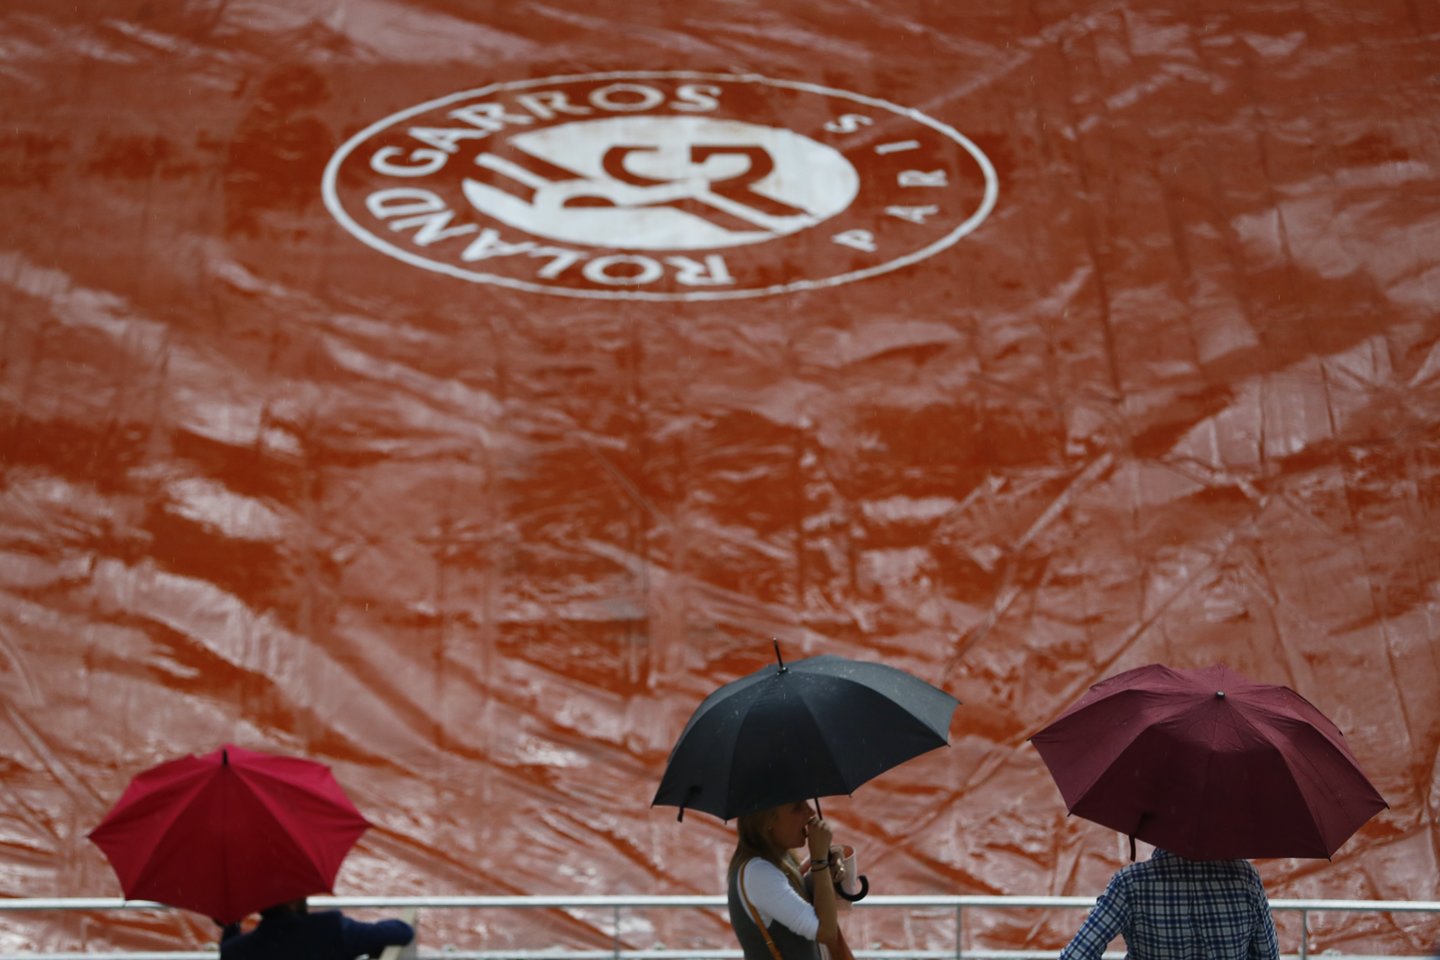  Prancūzijoje teniso dvikovas buvo nutraukęs lietus.<br> Reuters/Scanpix nuotr.